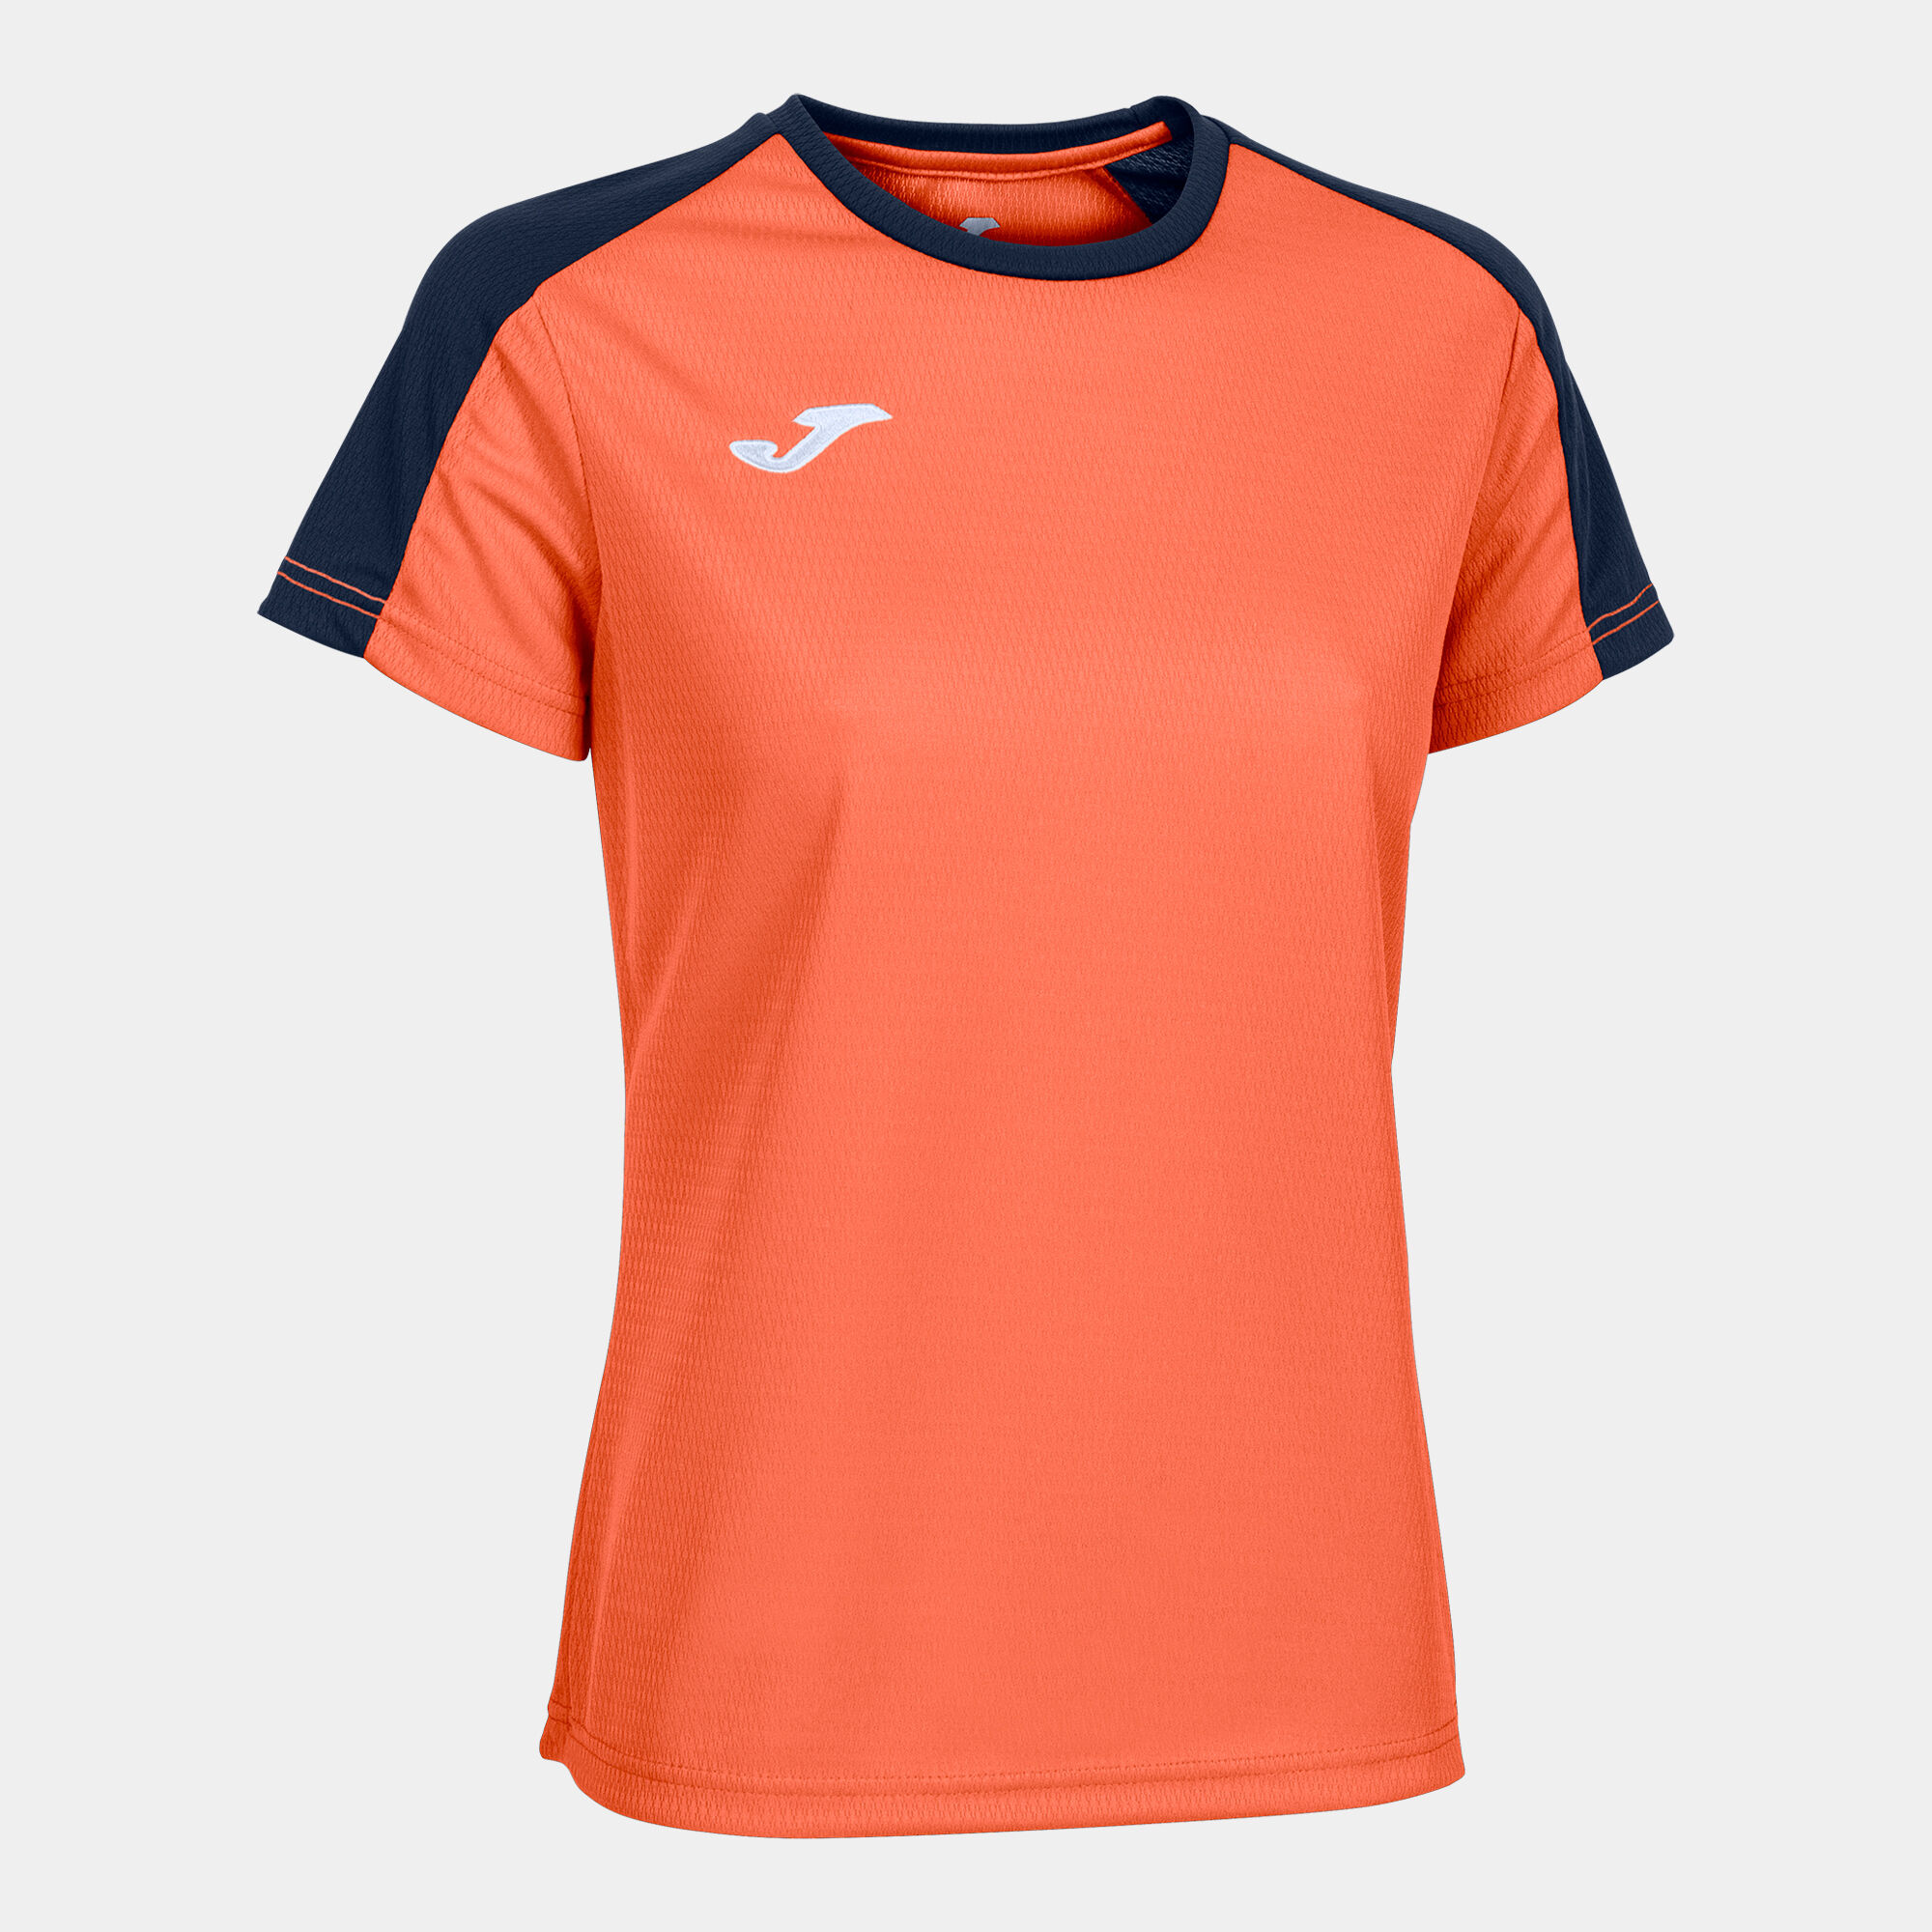 Shirt short sleeve woman Eco Championship fluorescent orange navy blue